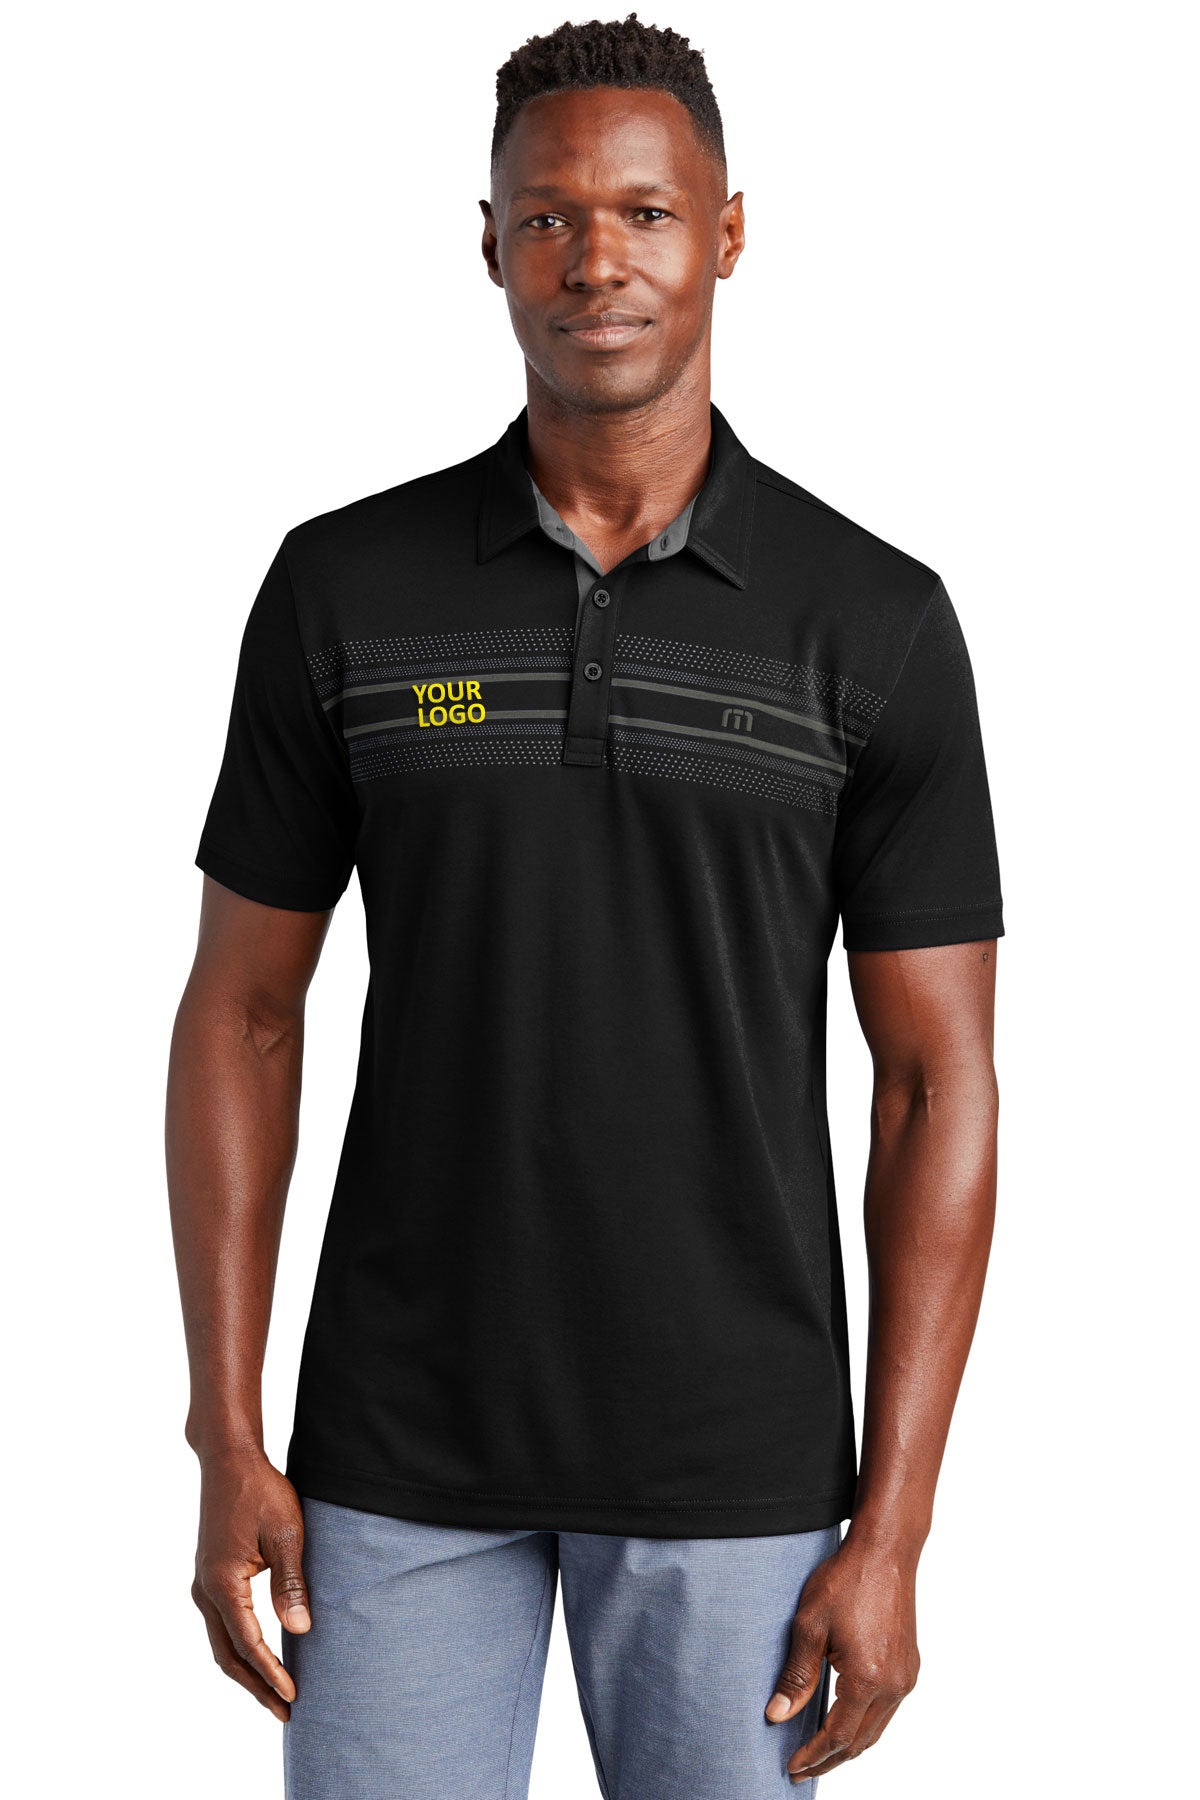 TravisMathew Black Polos custom embroidered polo shirts